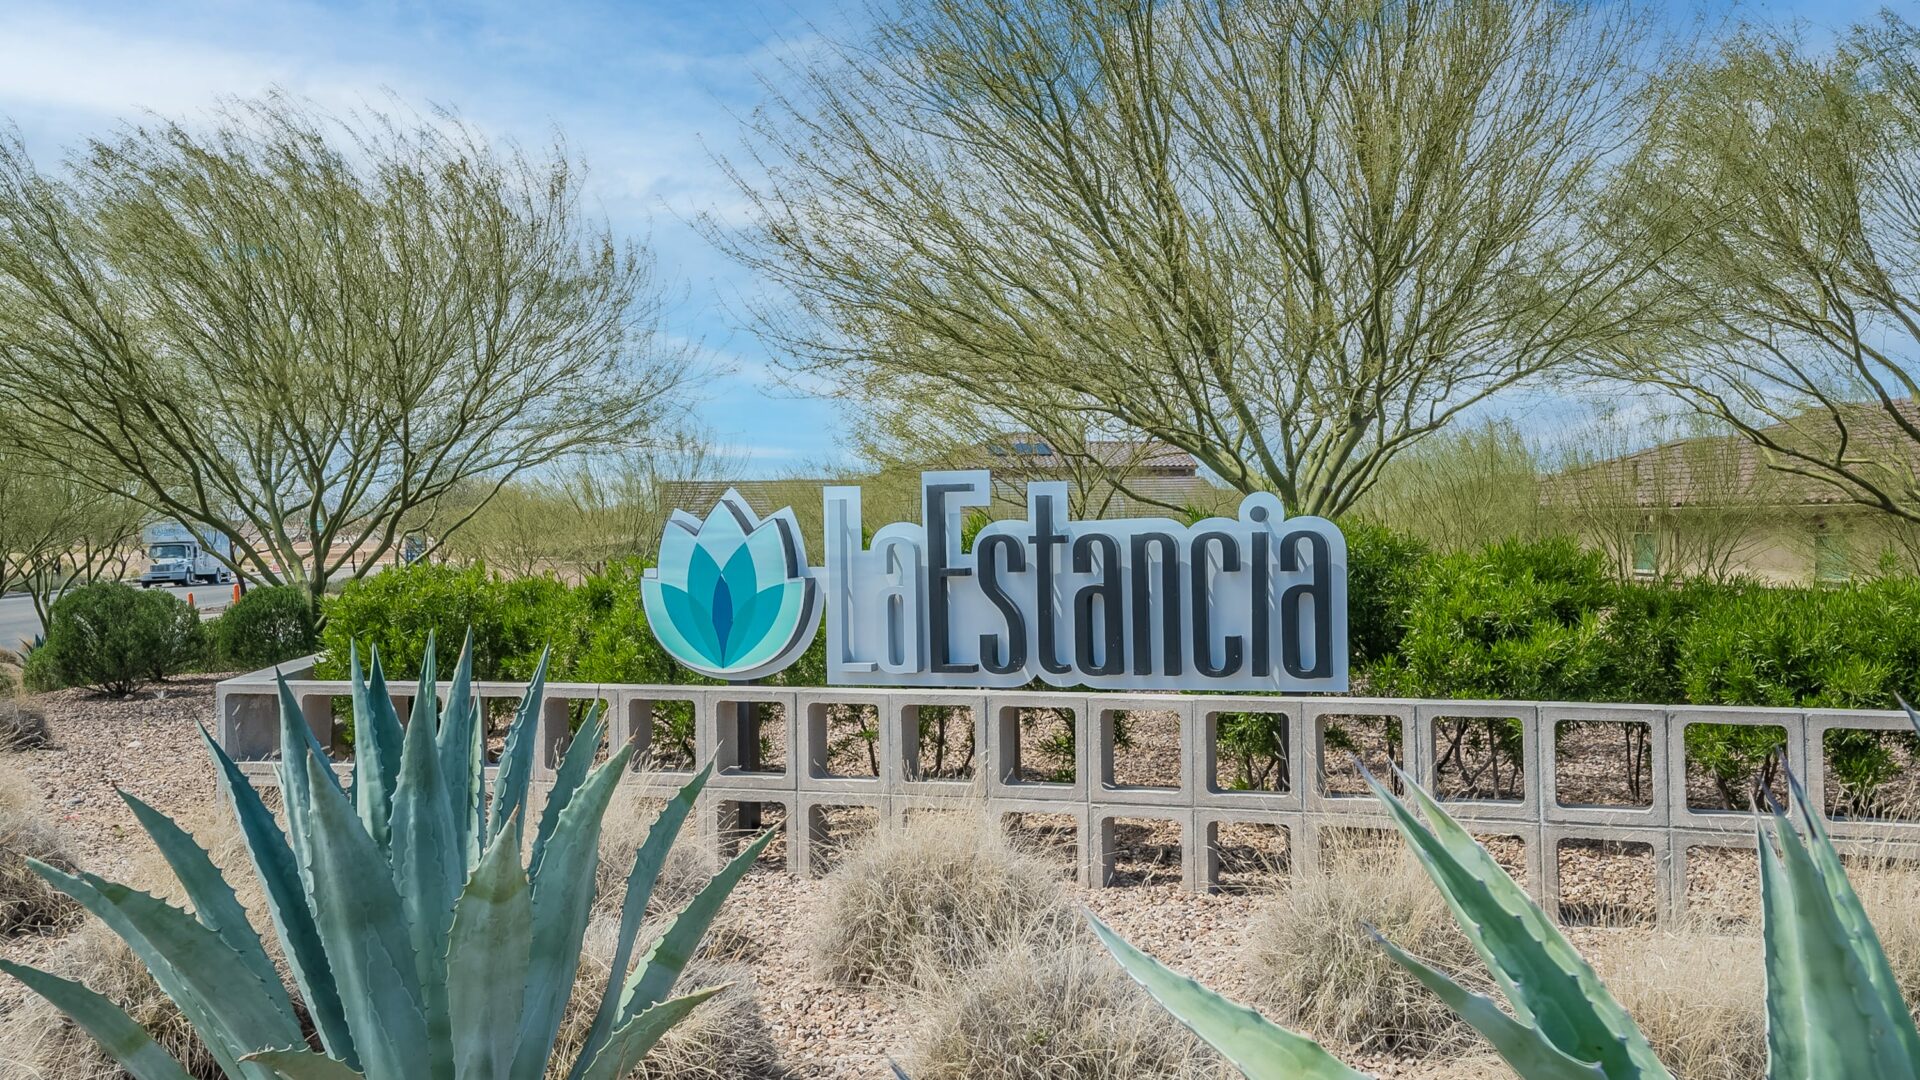 La Estancia community sign